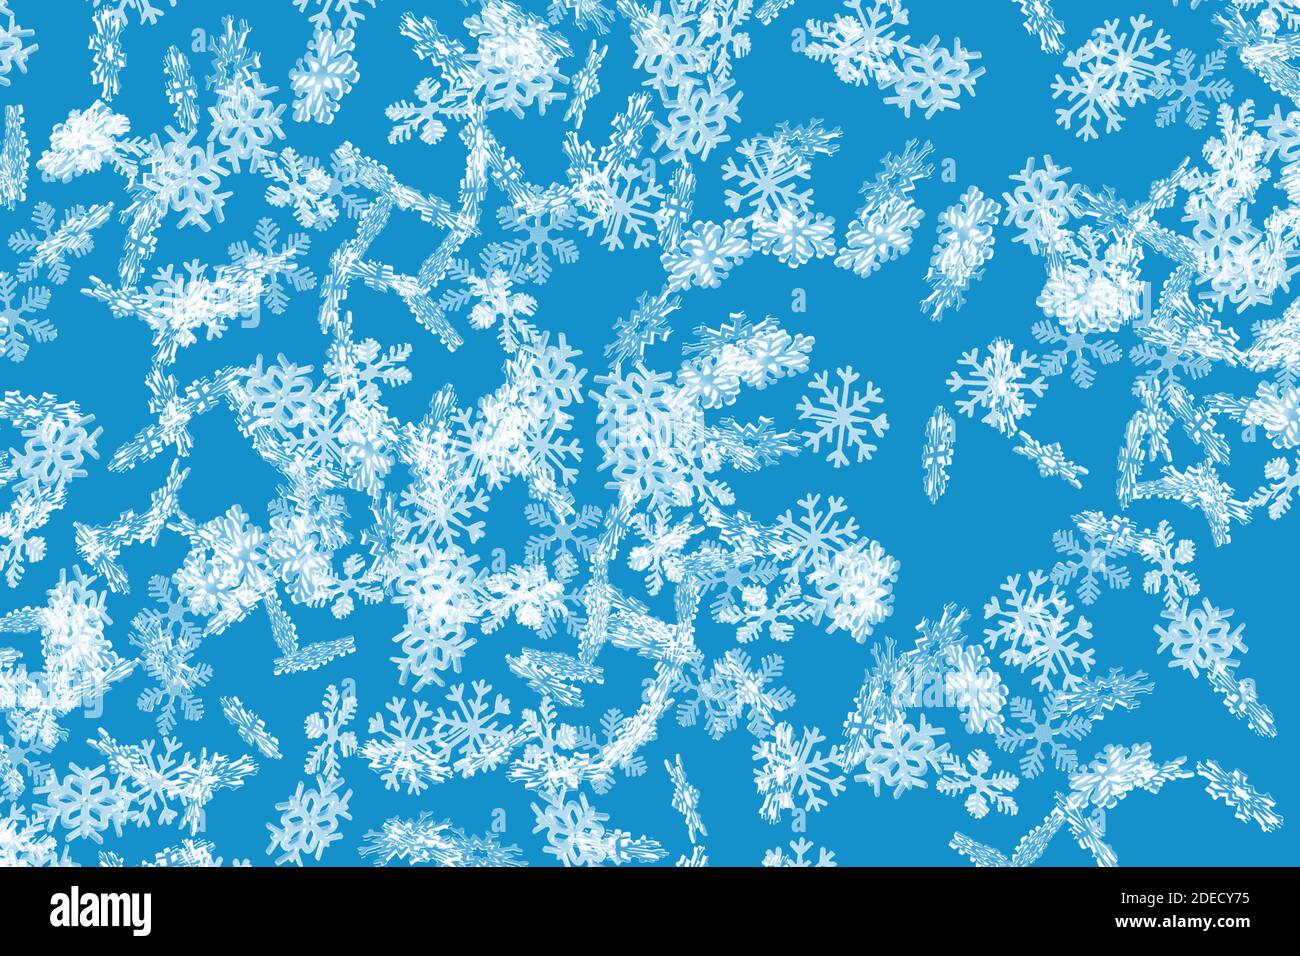 Blue Frozen Snowflake Pattern With Falling Snowflakes Wallpaper